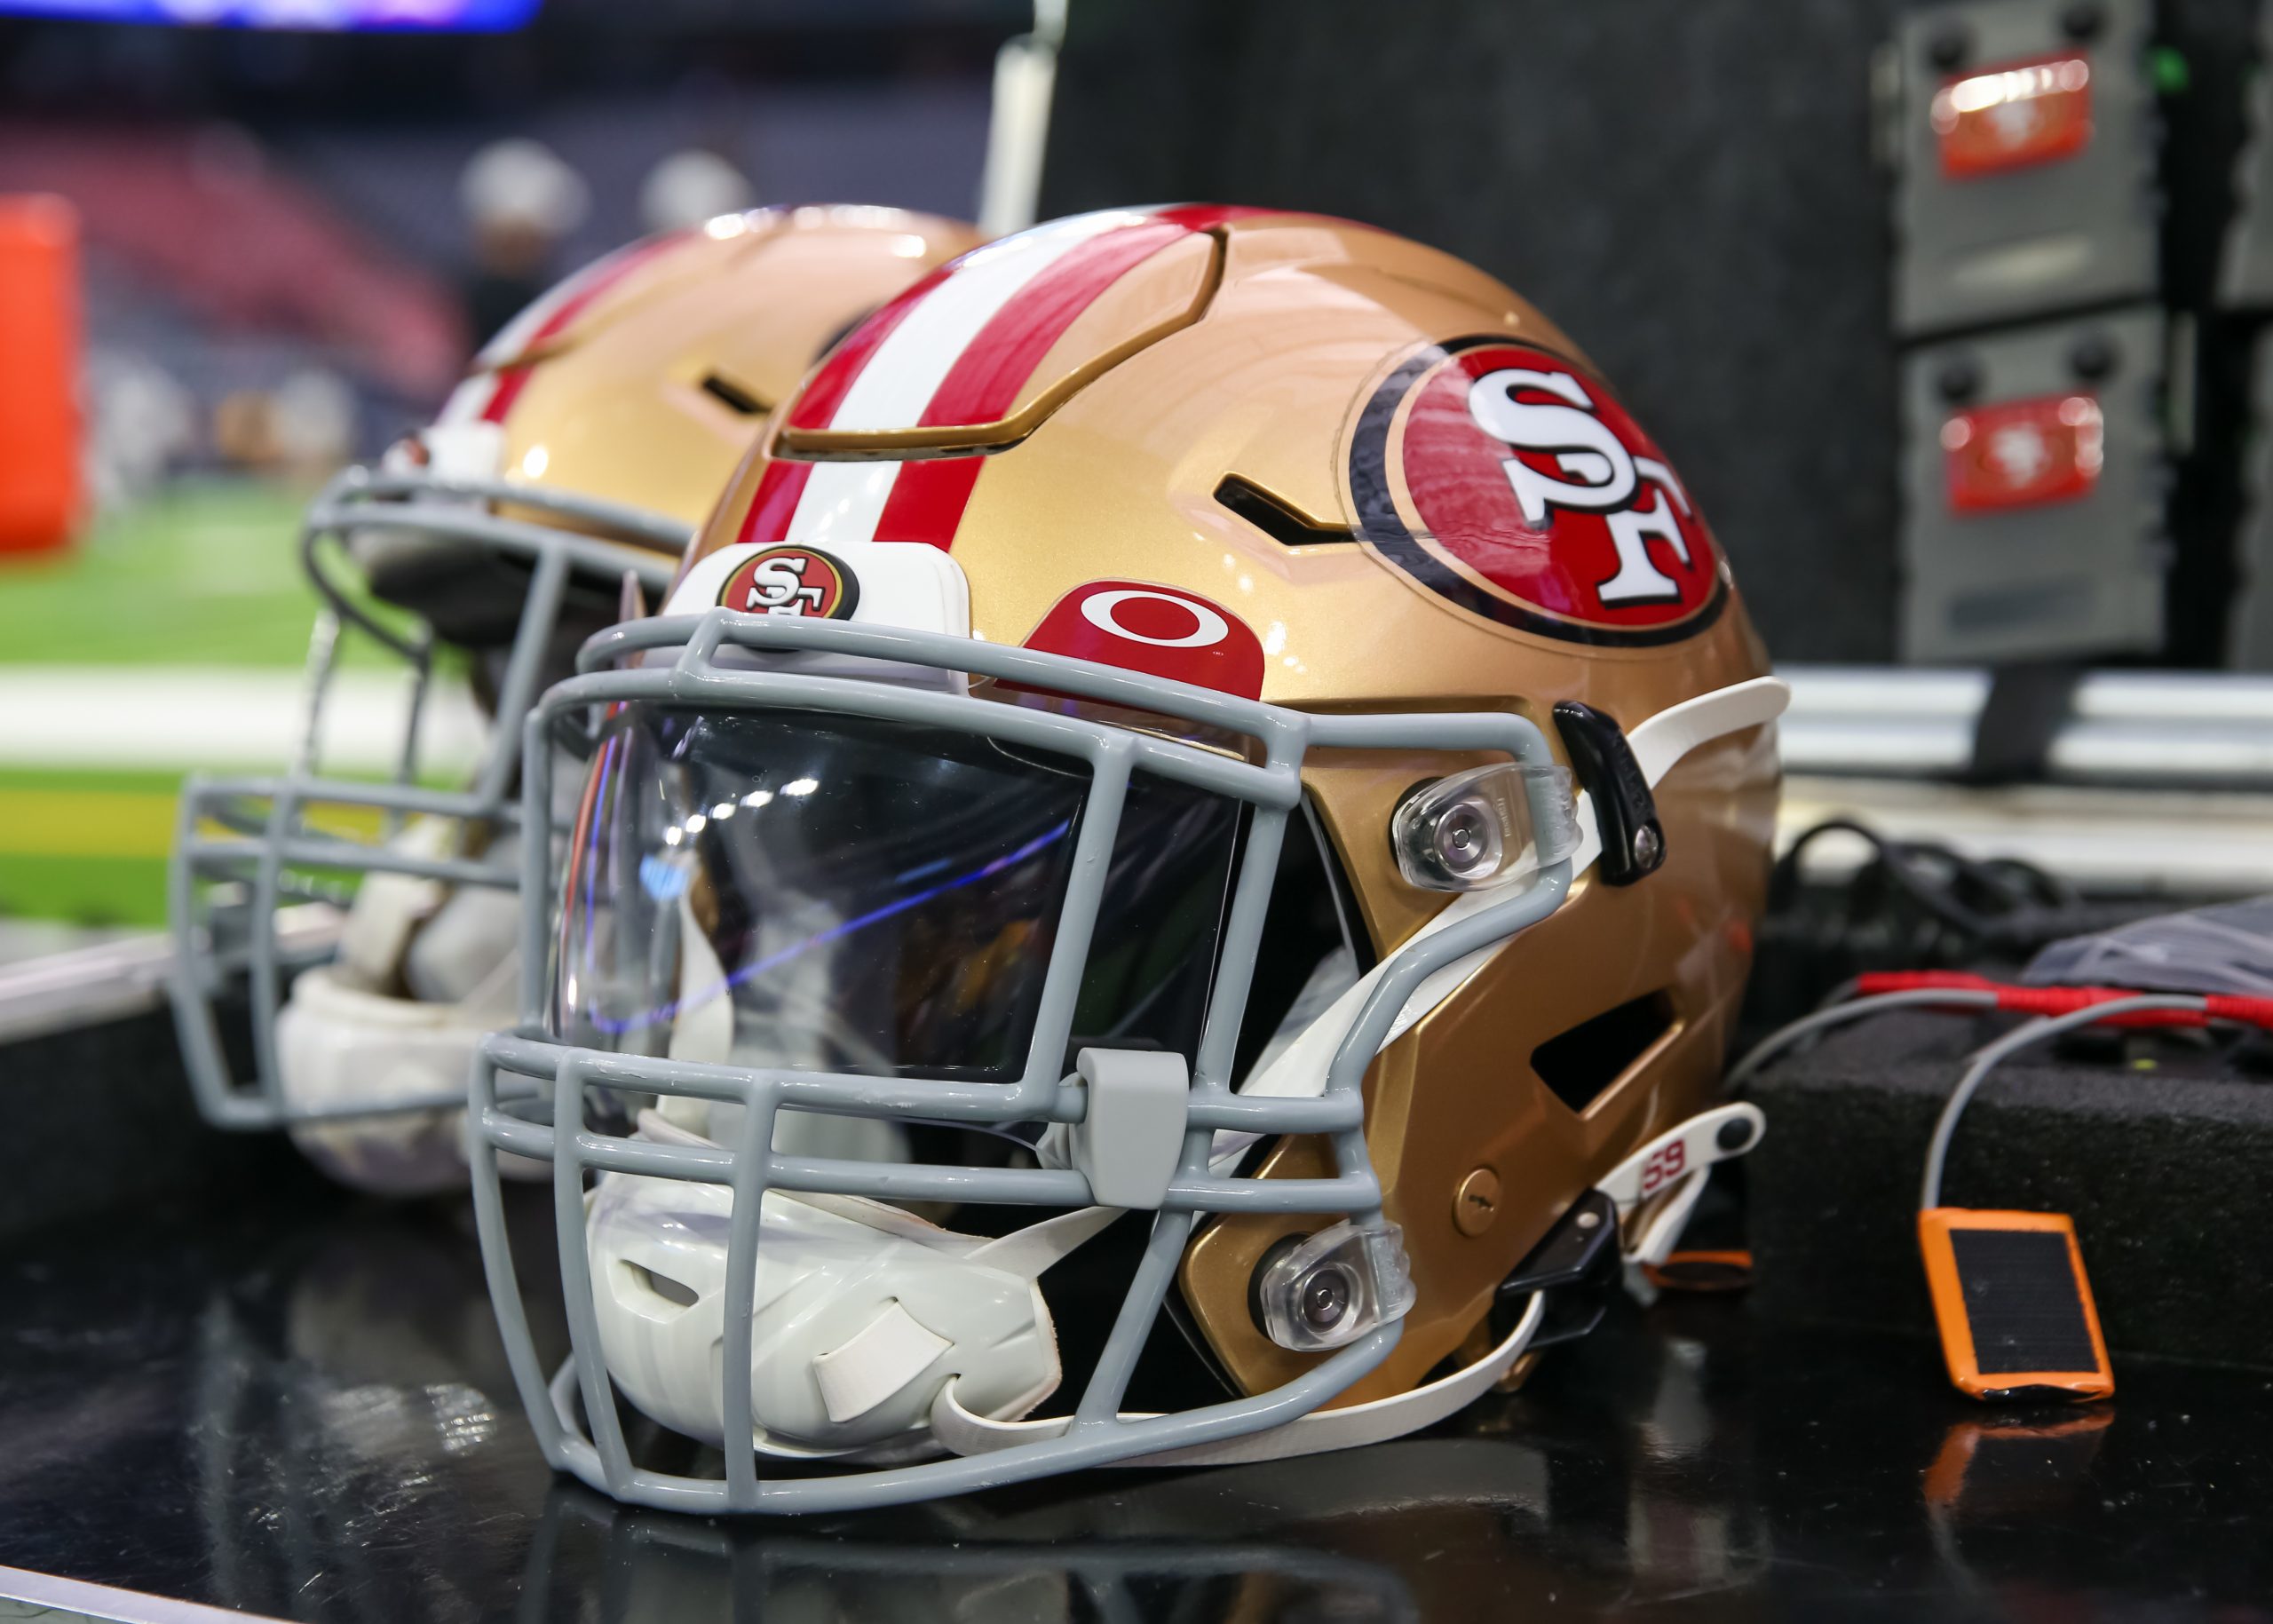 San Francisco 49ers helmets rest on team trunks during the NFL preseason game between the San Franc...